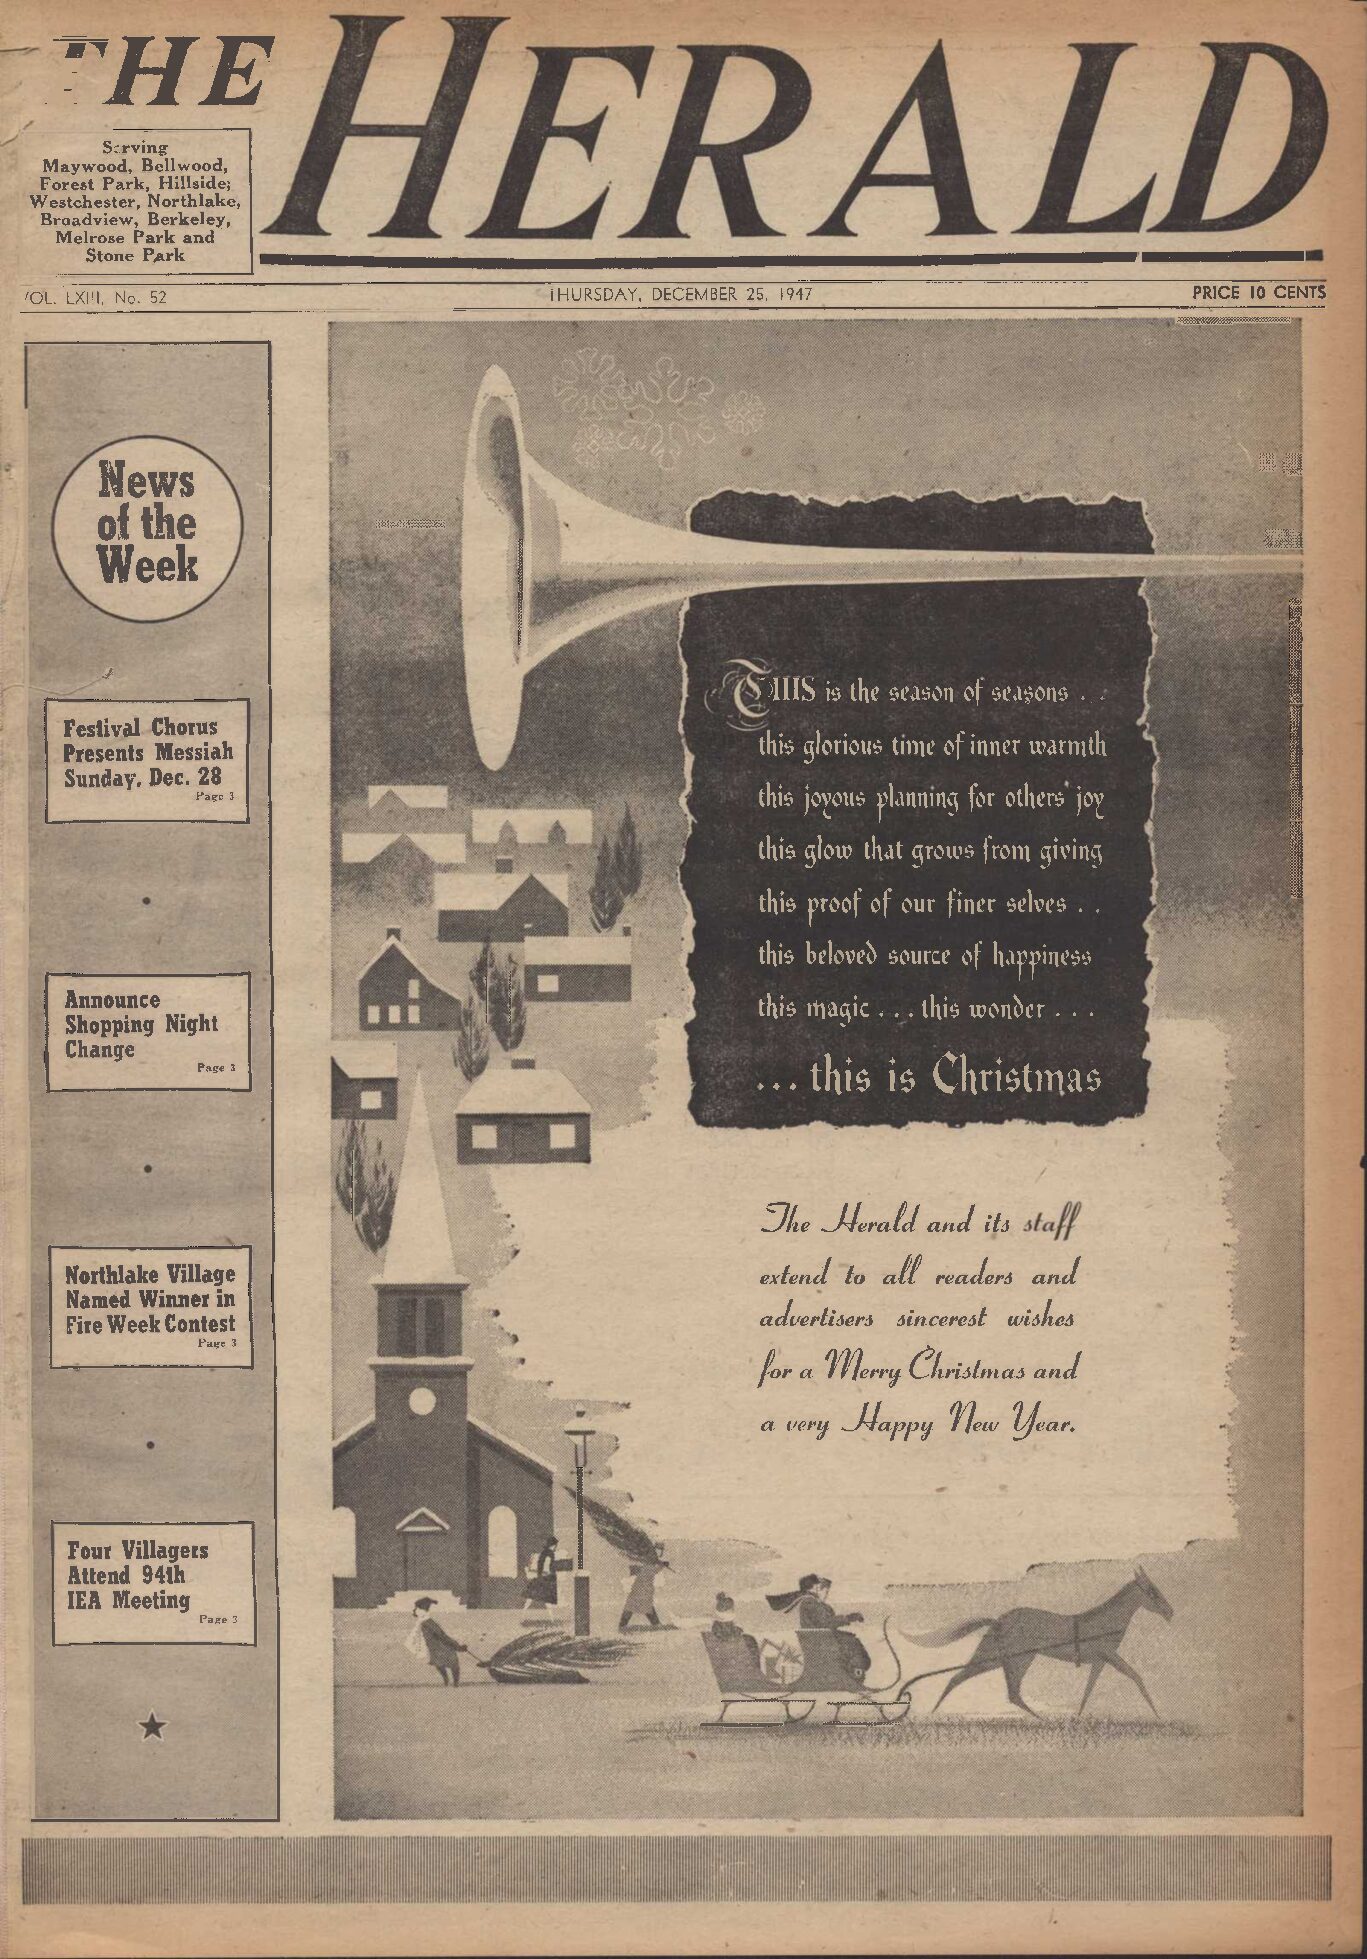 The Herald – 19471225